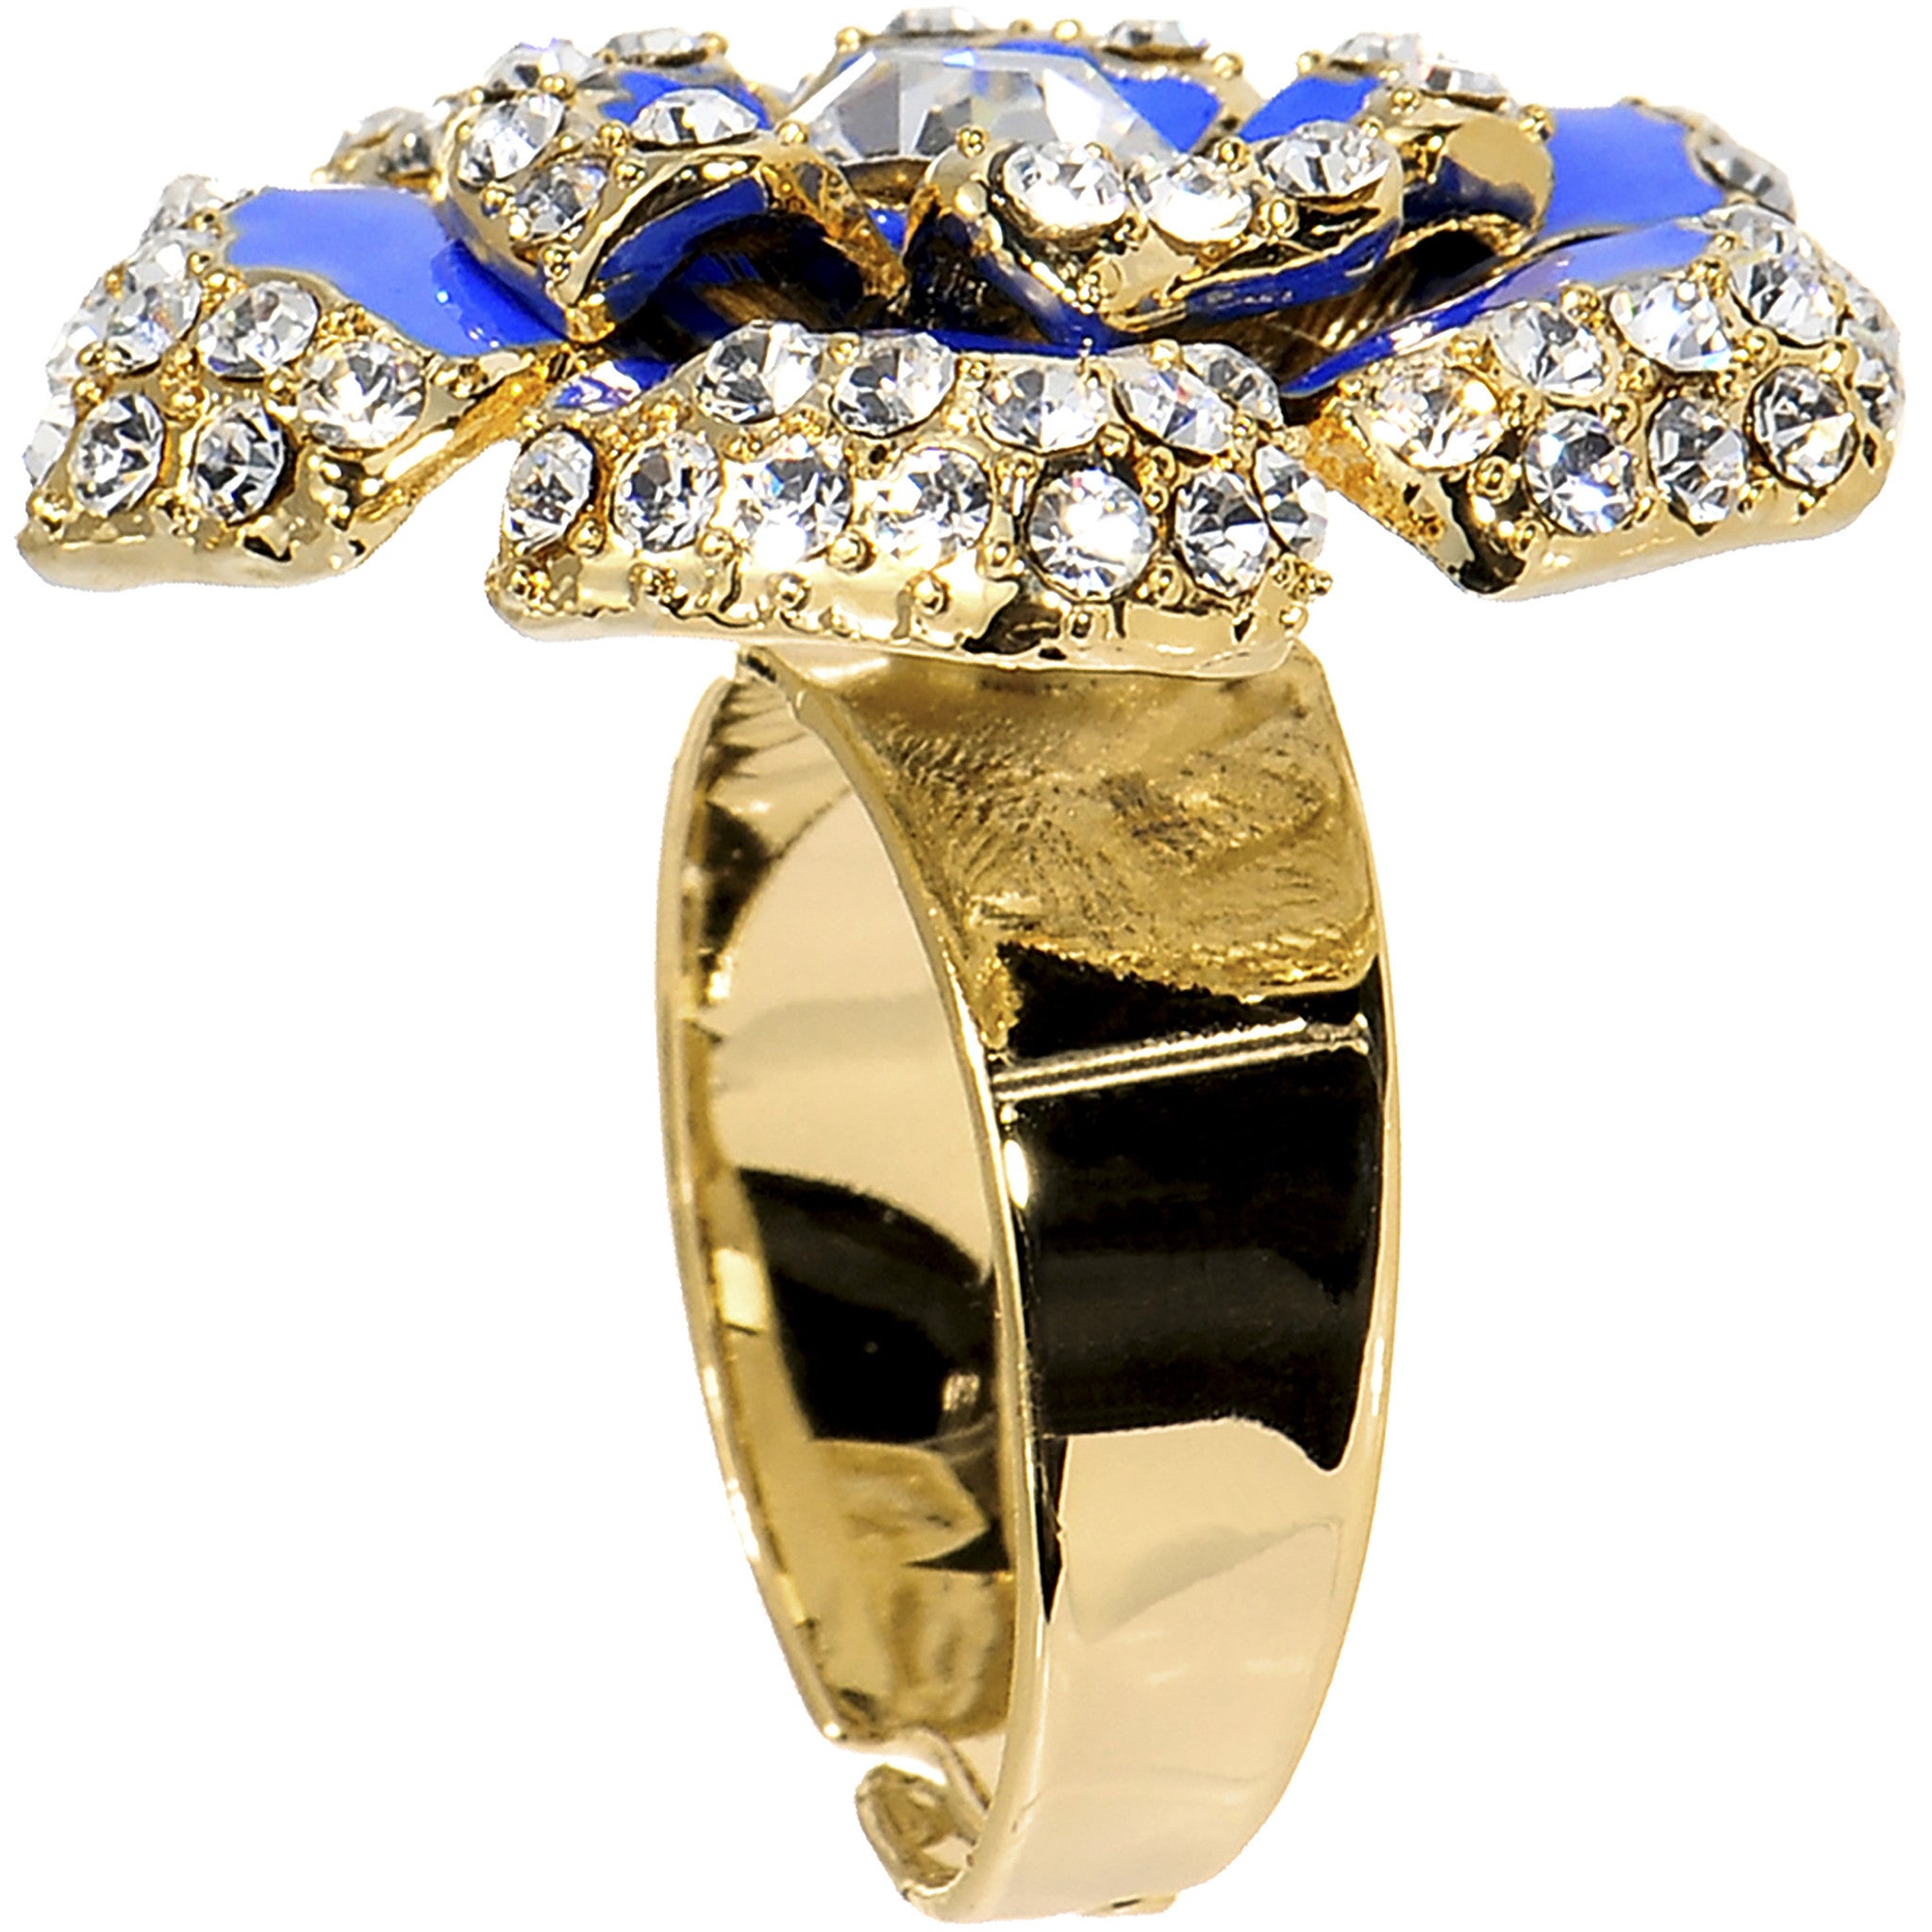 Gold Tone Crystalline Blue Enamel Flower Adjustable Ring